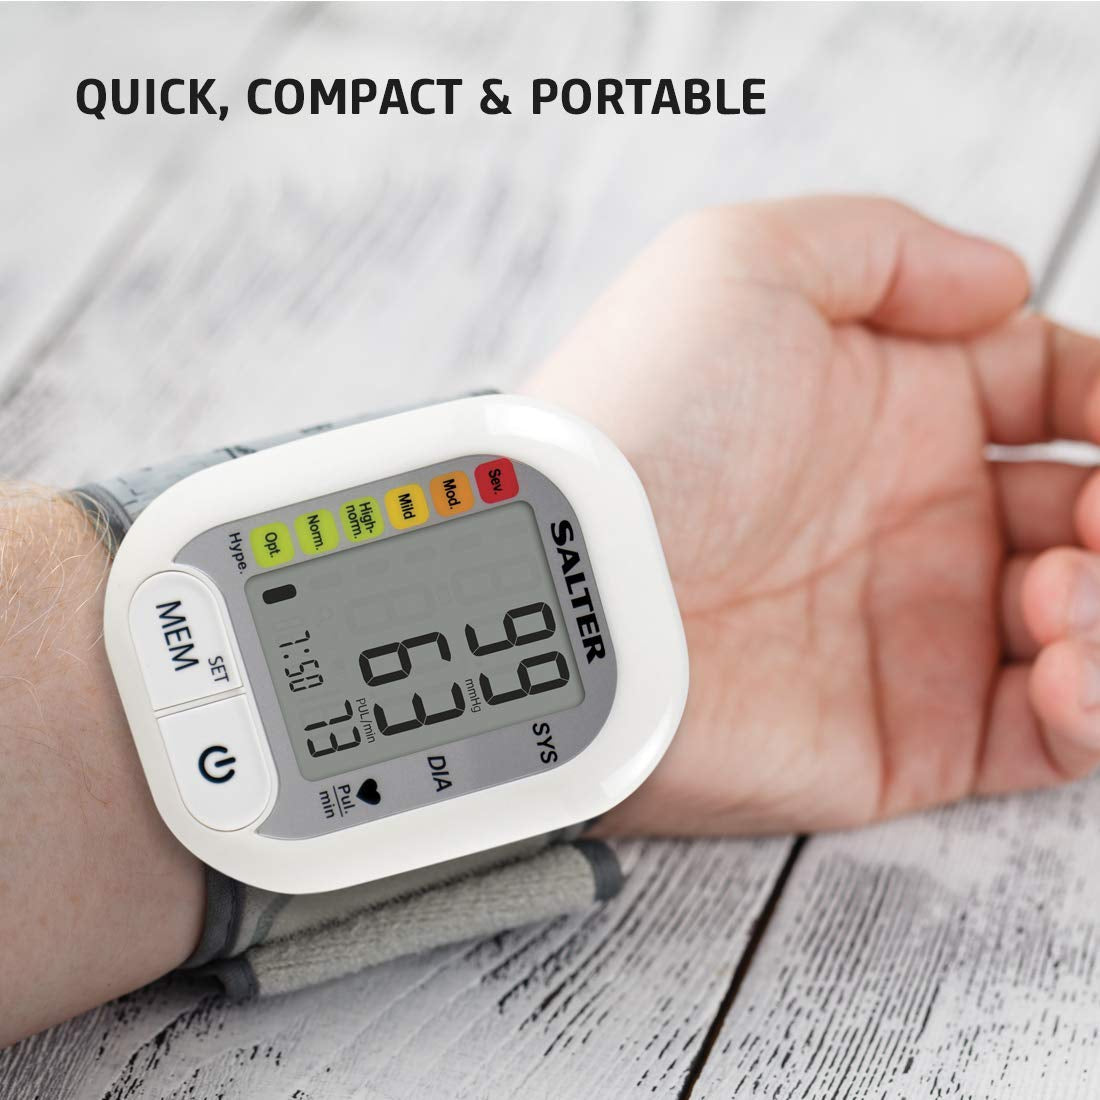 Salter by Homedics BPW-9101 Automatic Wrist Blood Pressure Monitor